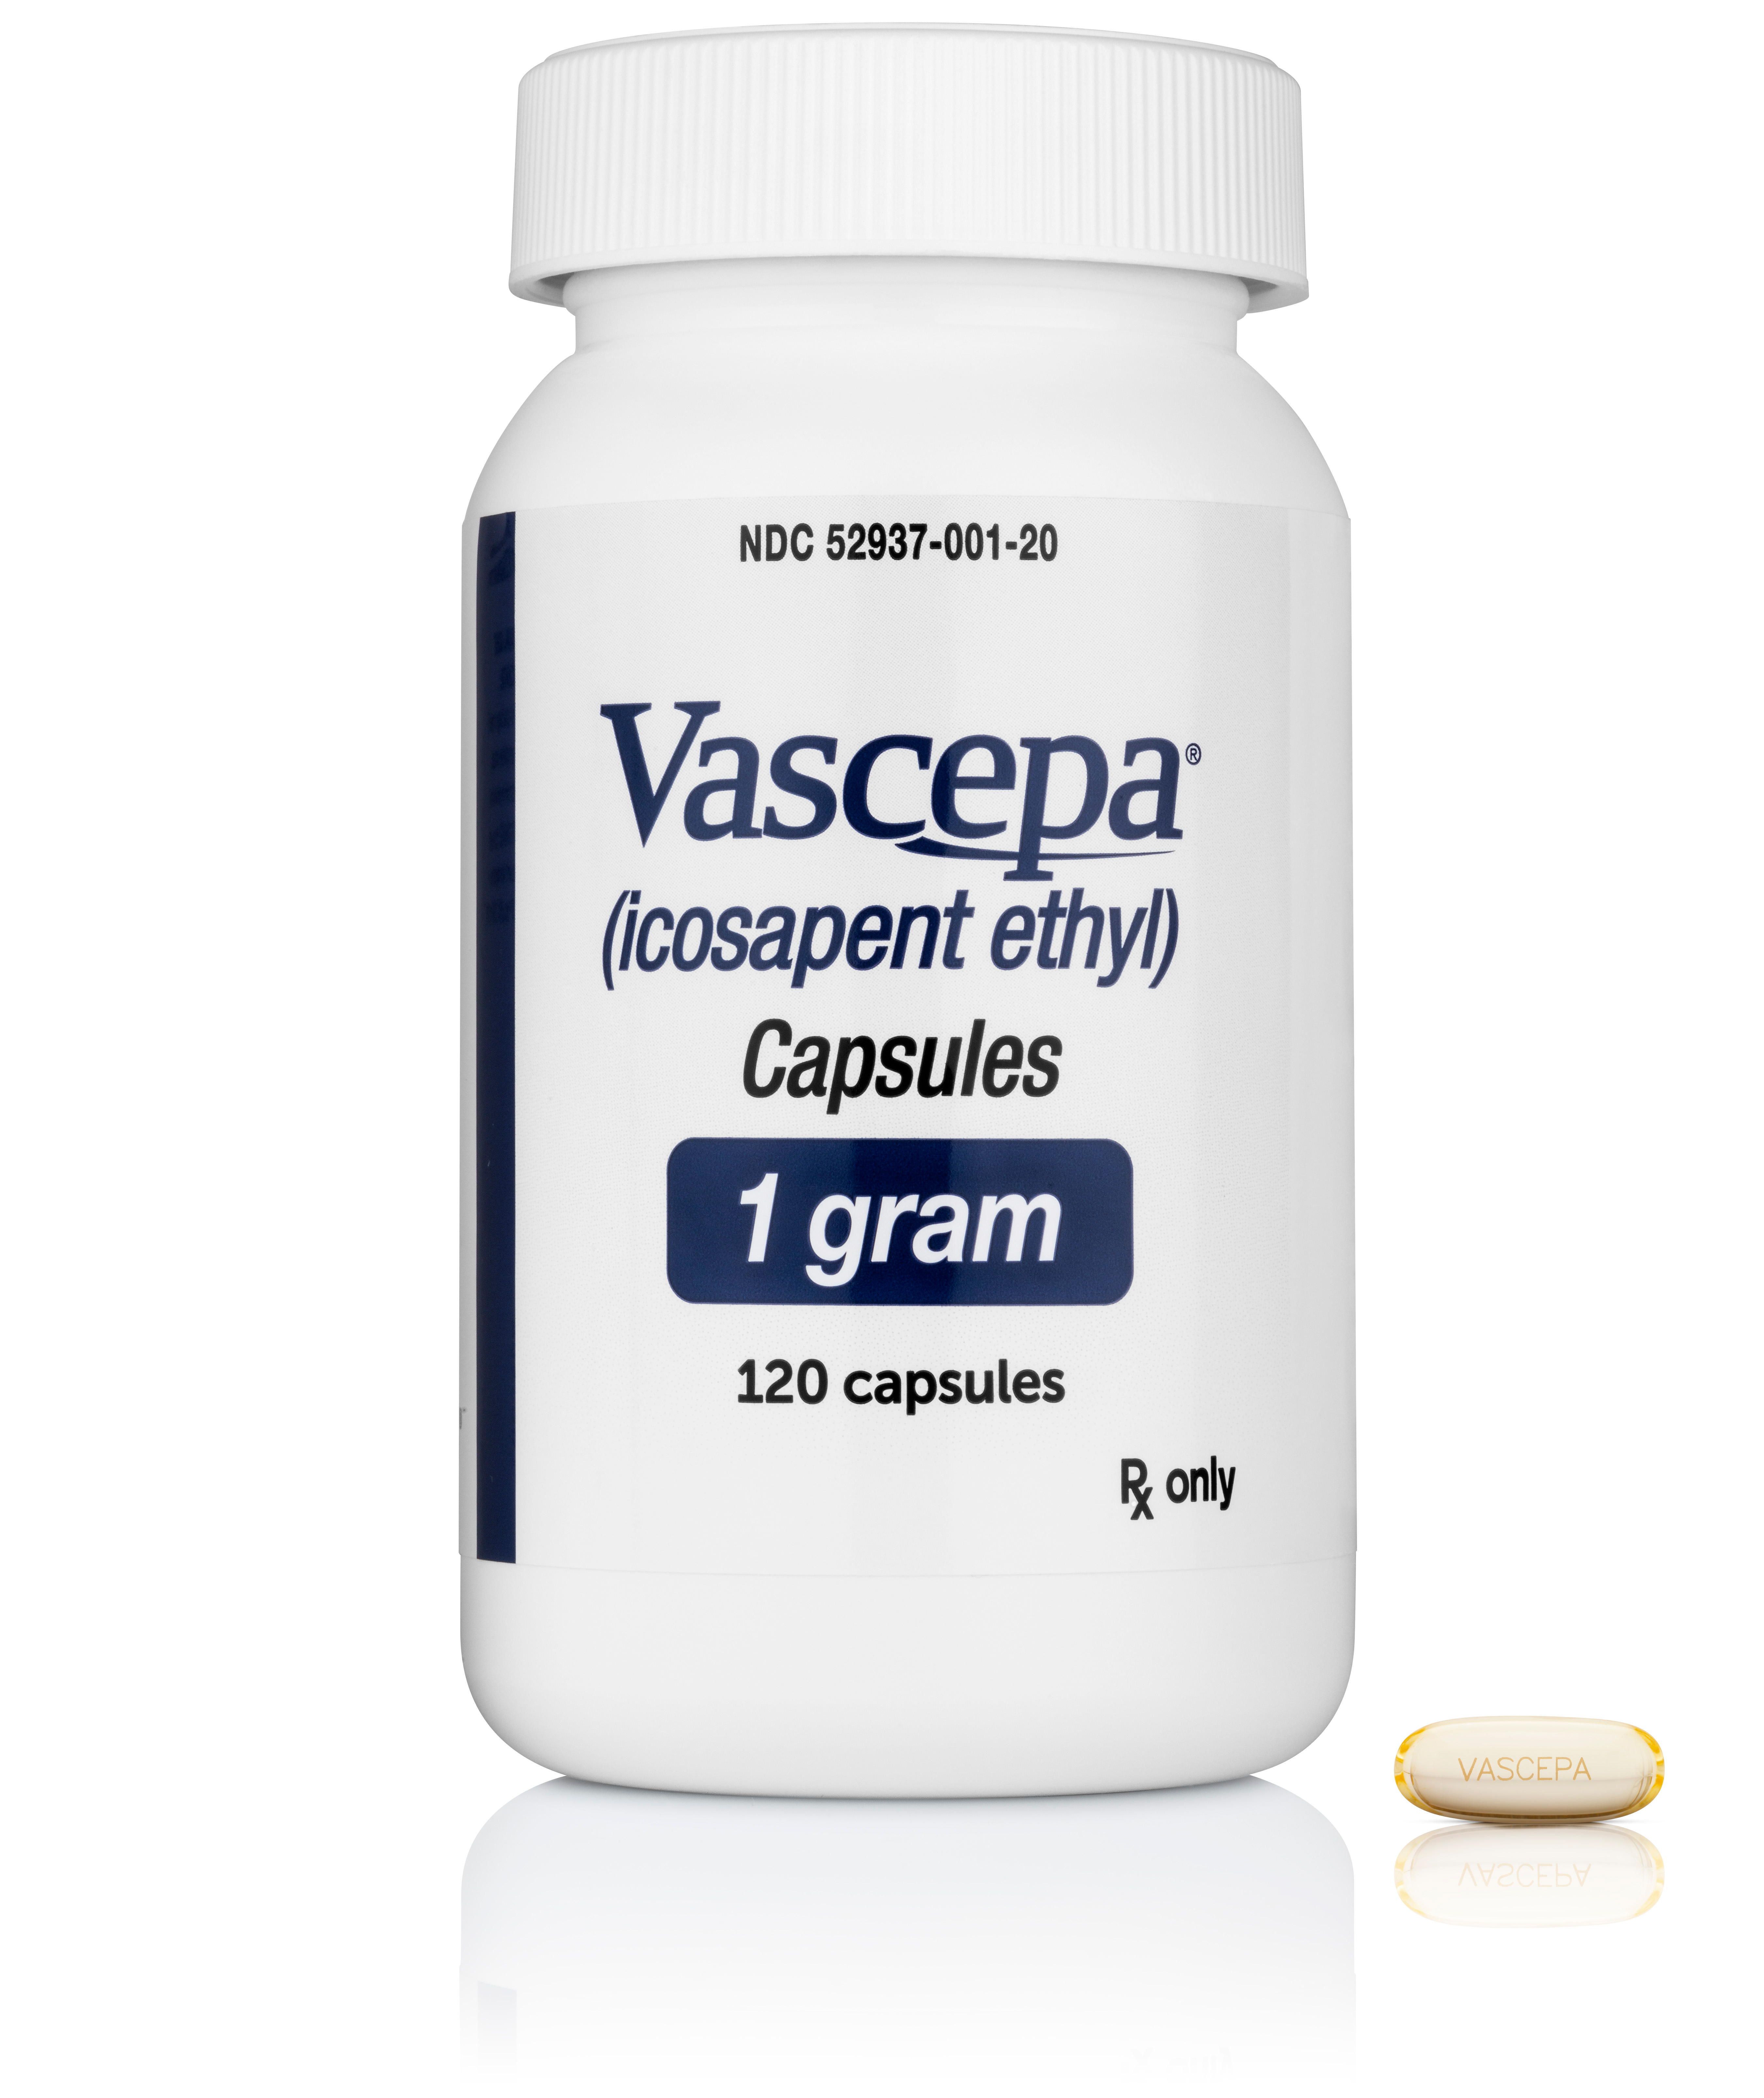 Comprar Vascepa (icosapent ethyl) Online - Preço & Custos